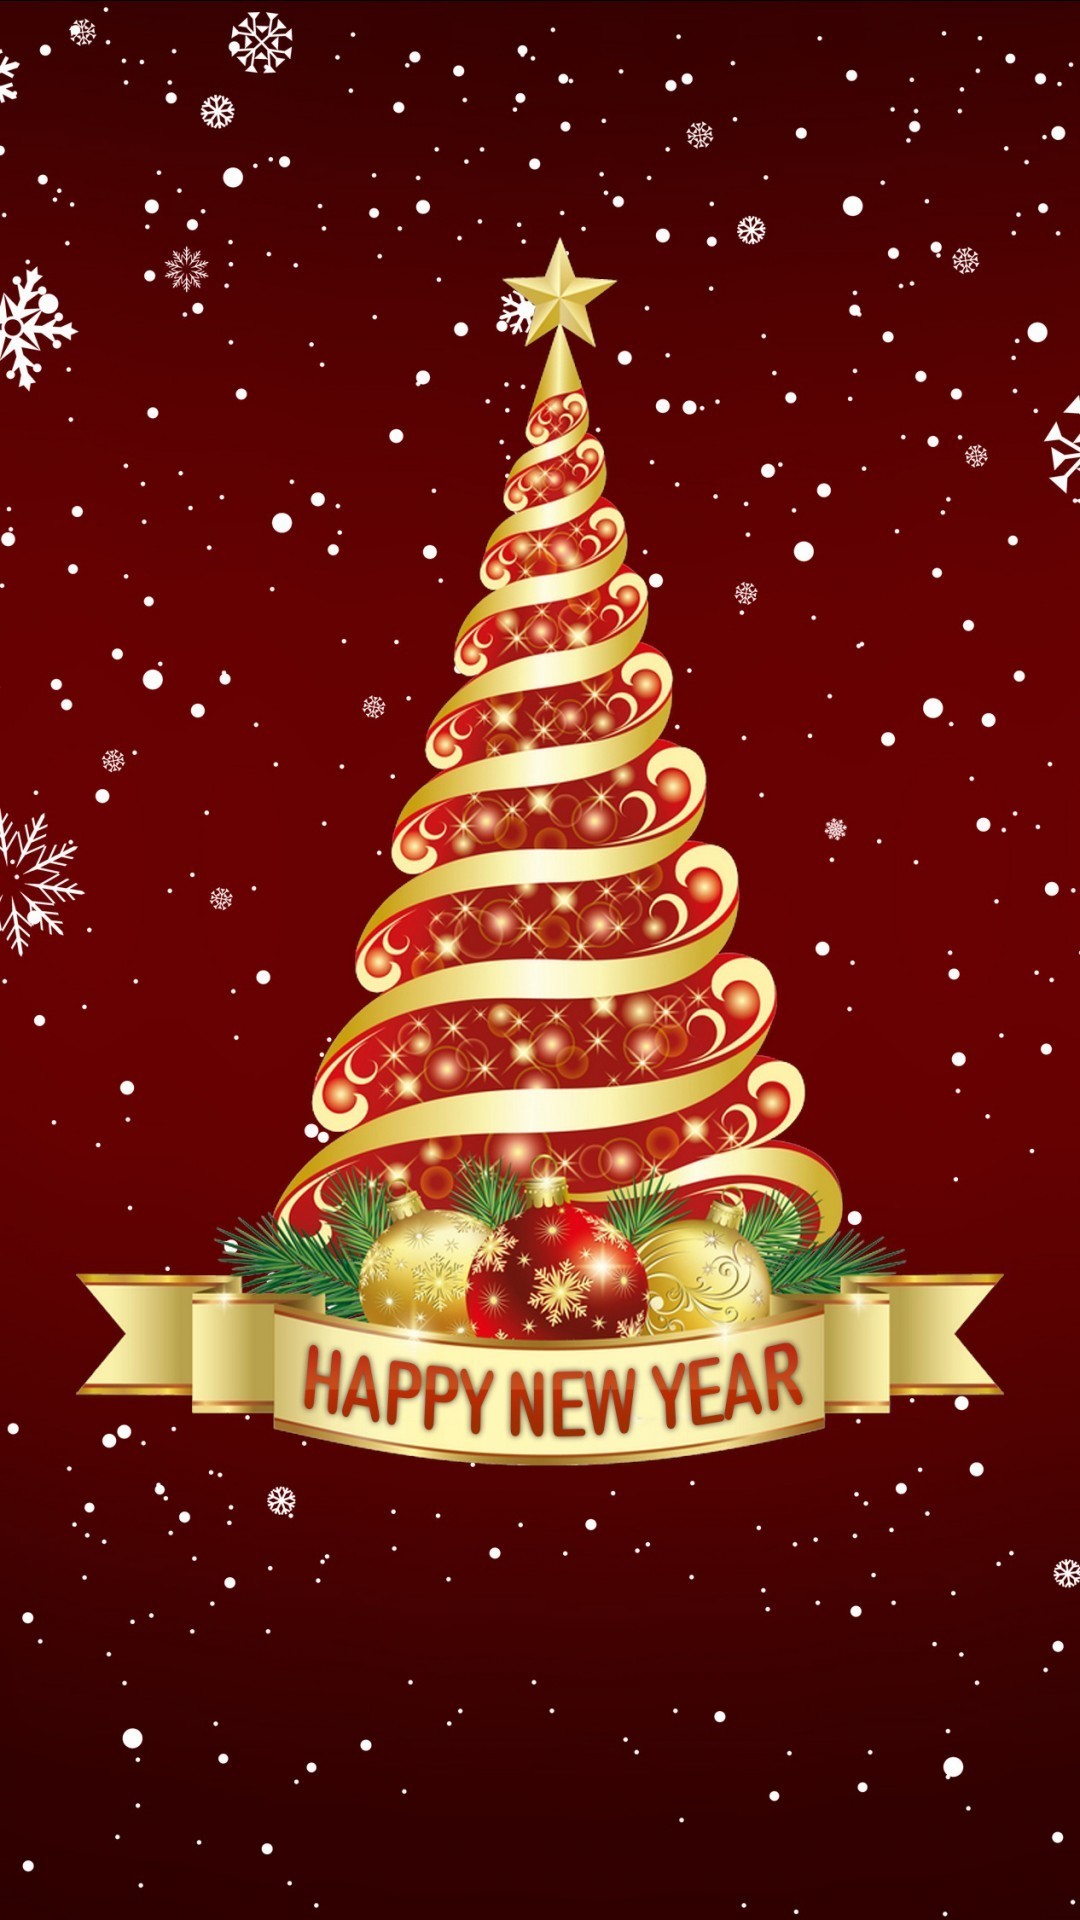 1080x1920 Free Happy New Year Christmas Tree phone wallpaper by munkeyfreak1993